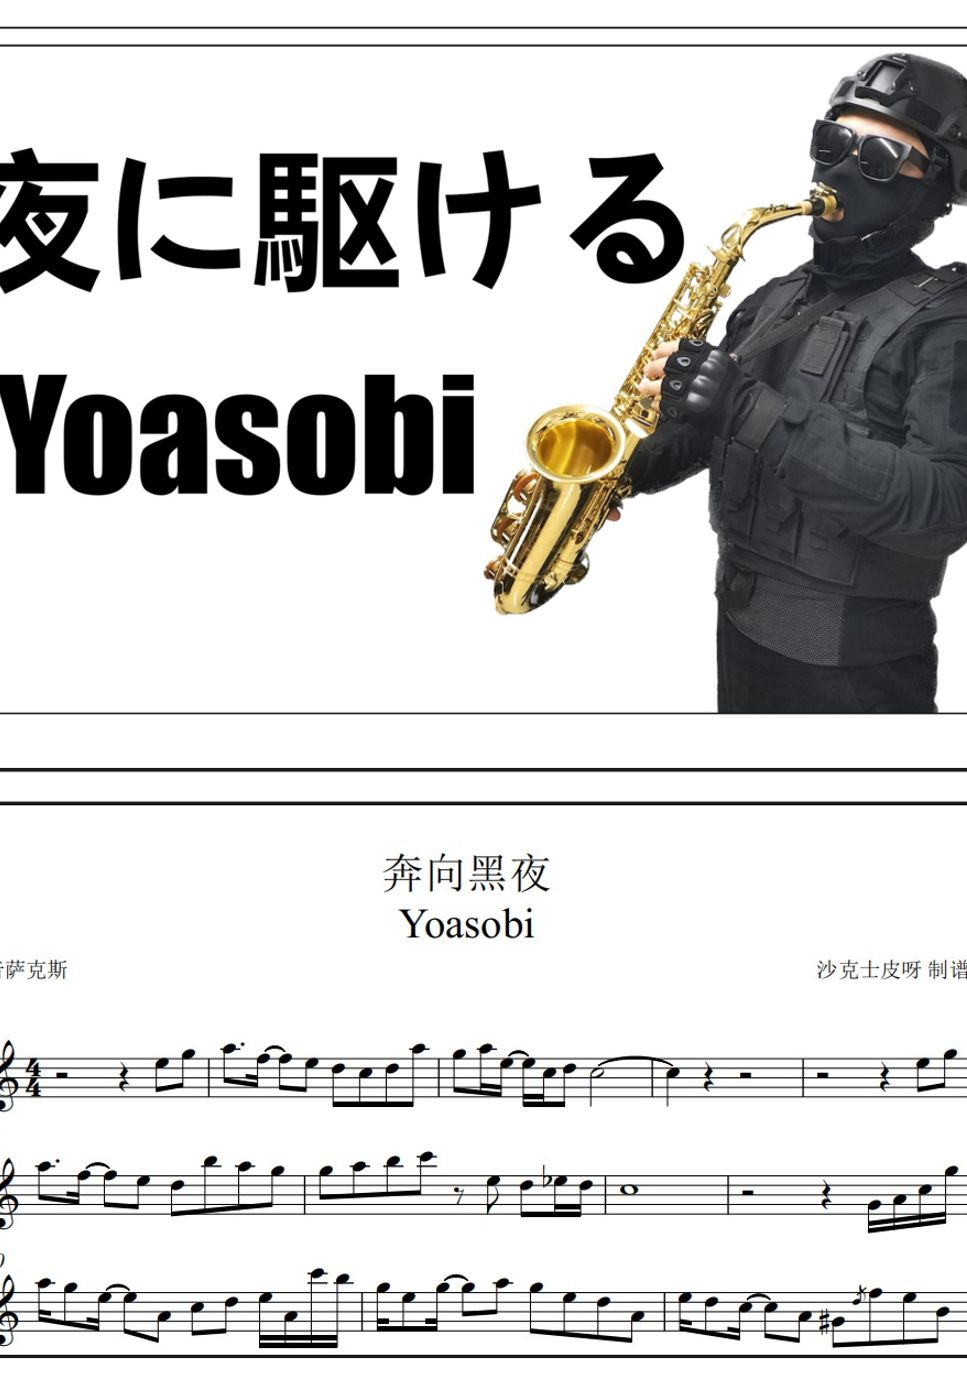 Yoasobi - 夜に駆ける by 沙克士皮呀